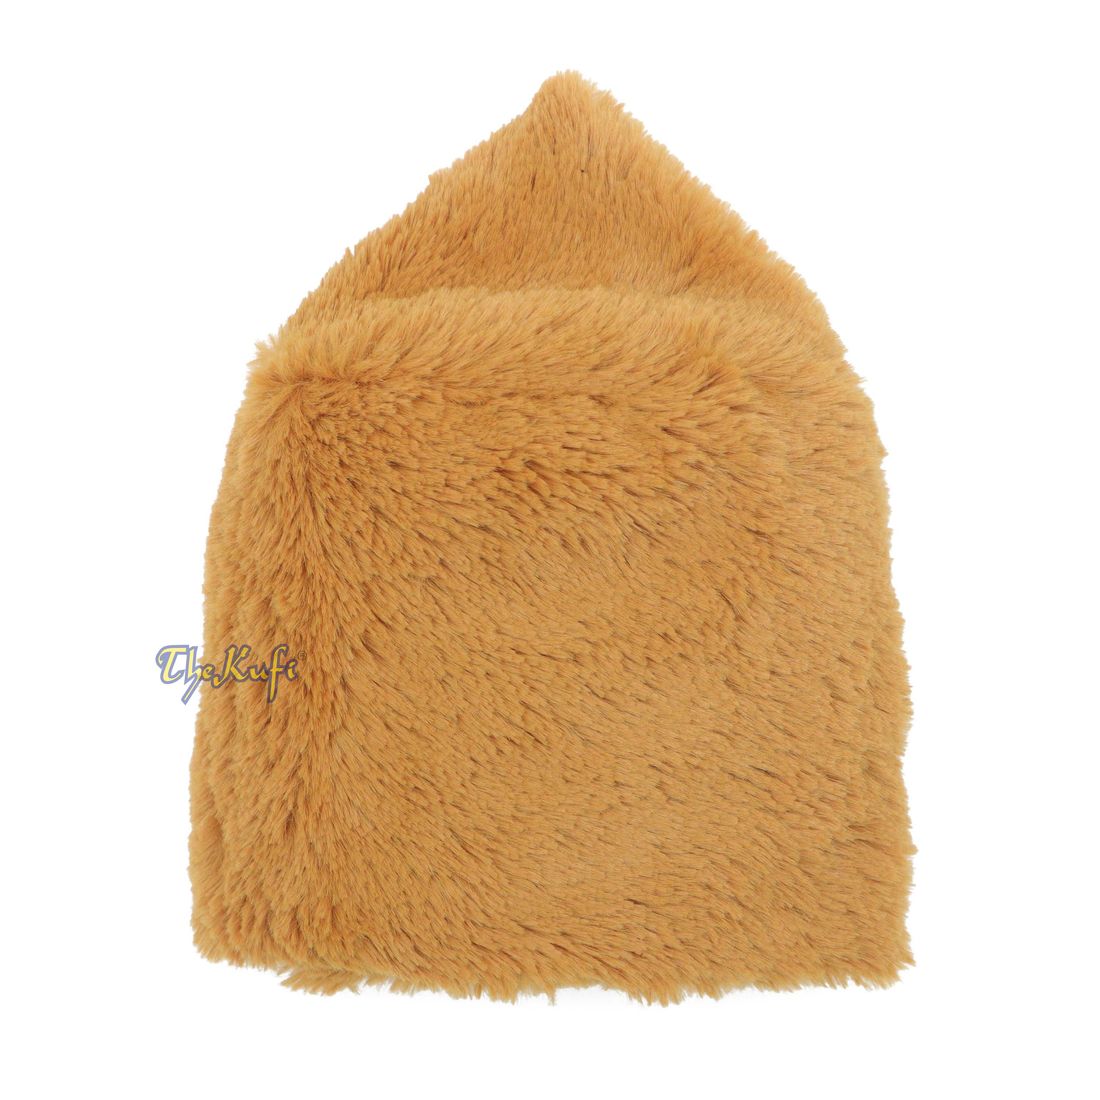 Golden Brown Winter Kufi Faux Fur Warm Chechen Uzbeki Style Islamic Hat Plush One-size Medium-large Stretchy 4-inch Tall Head Cover Muslim